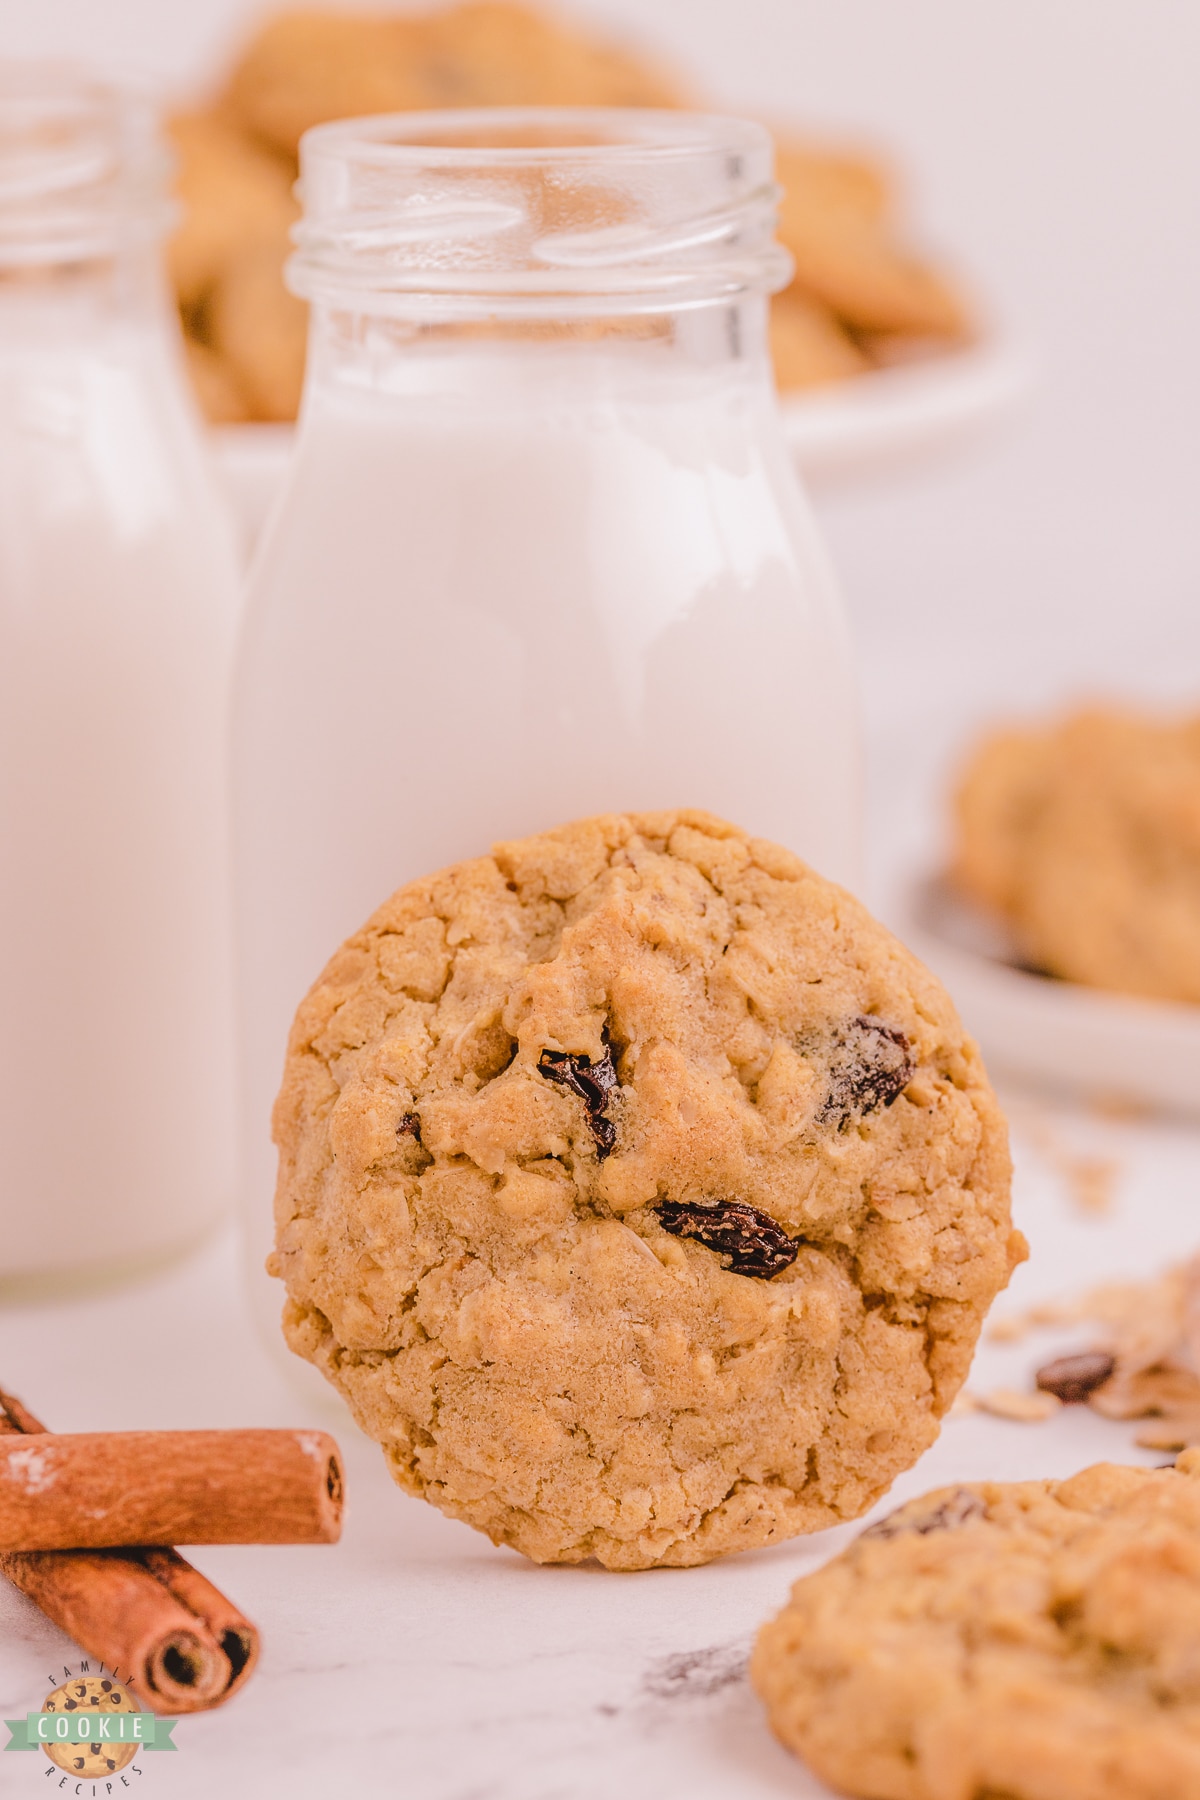 oatmeal raisin cookies and glass of milk